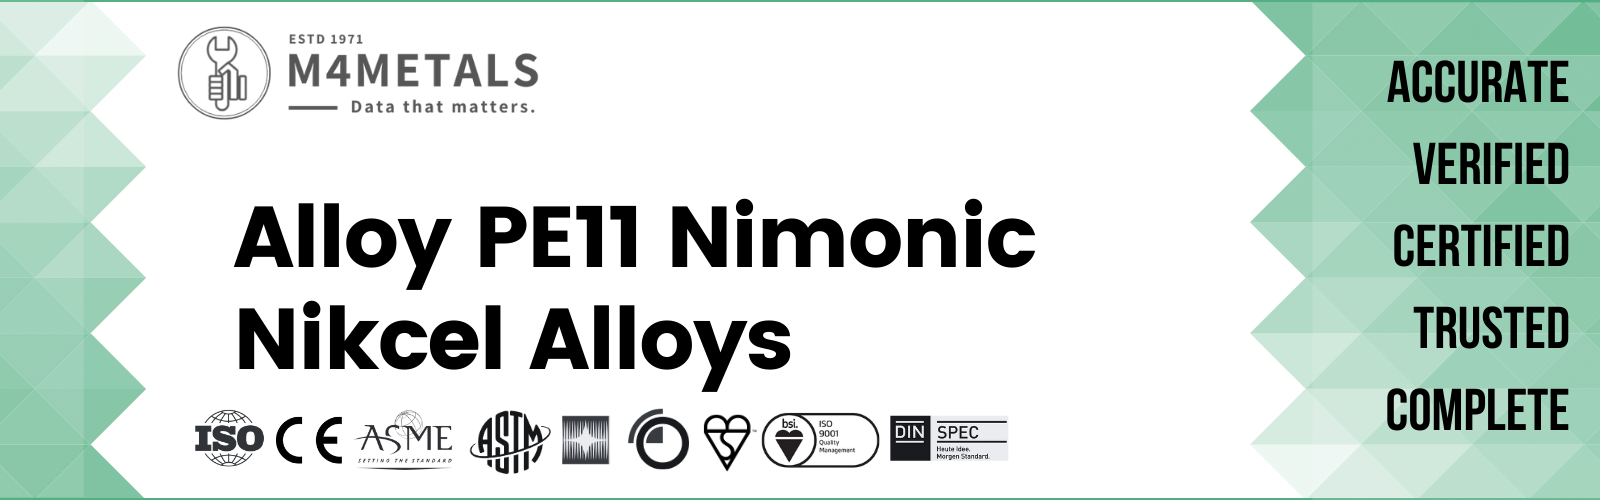 Nimonic Alloy PE11